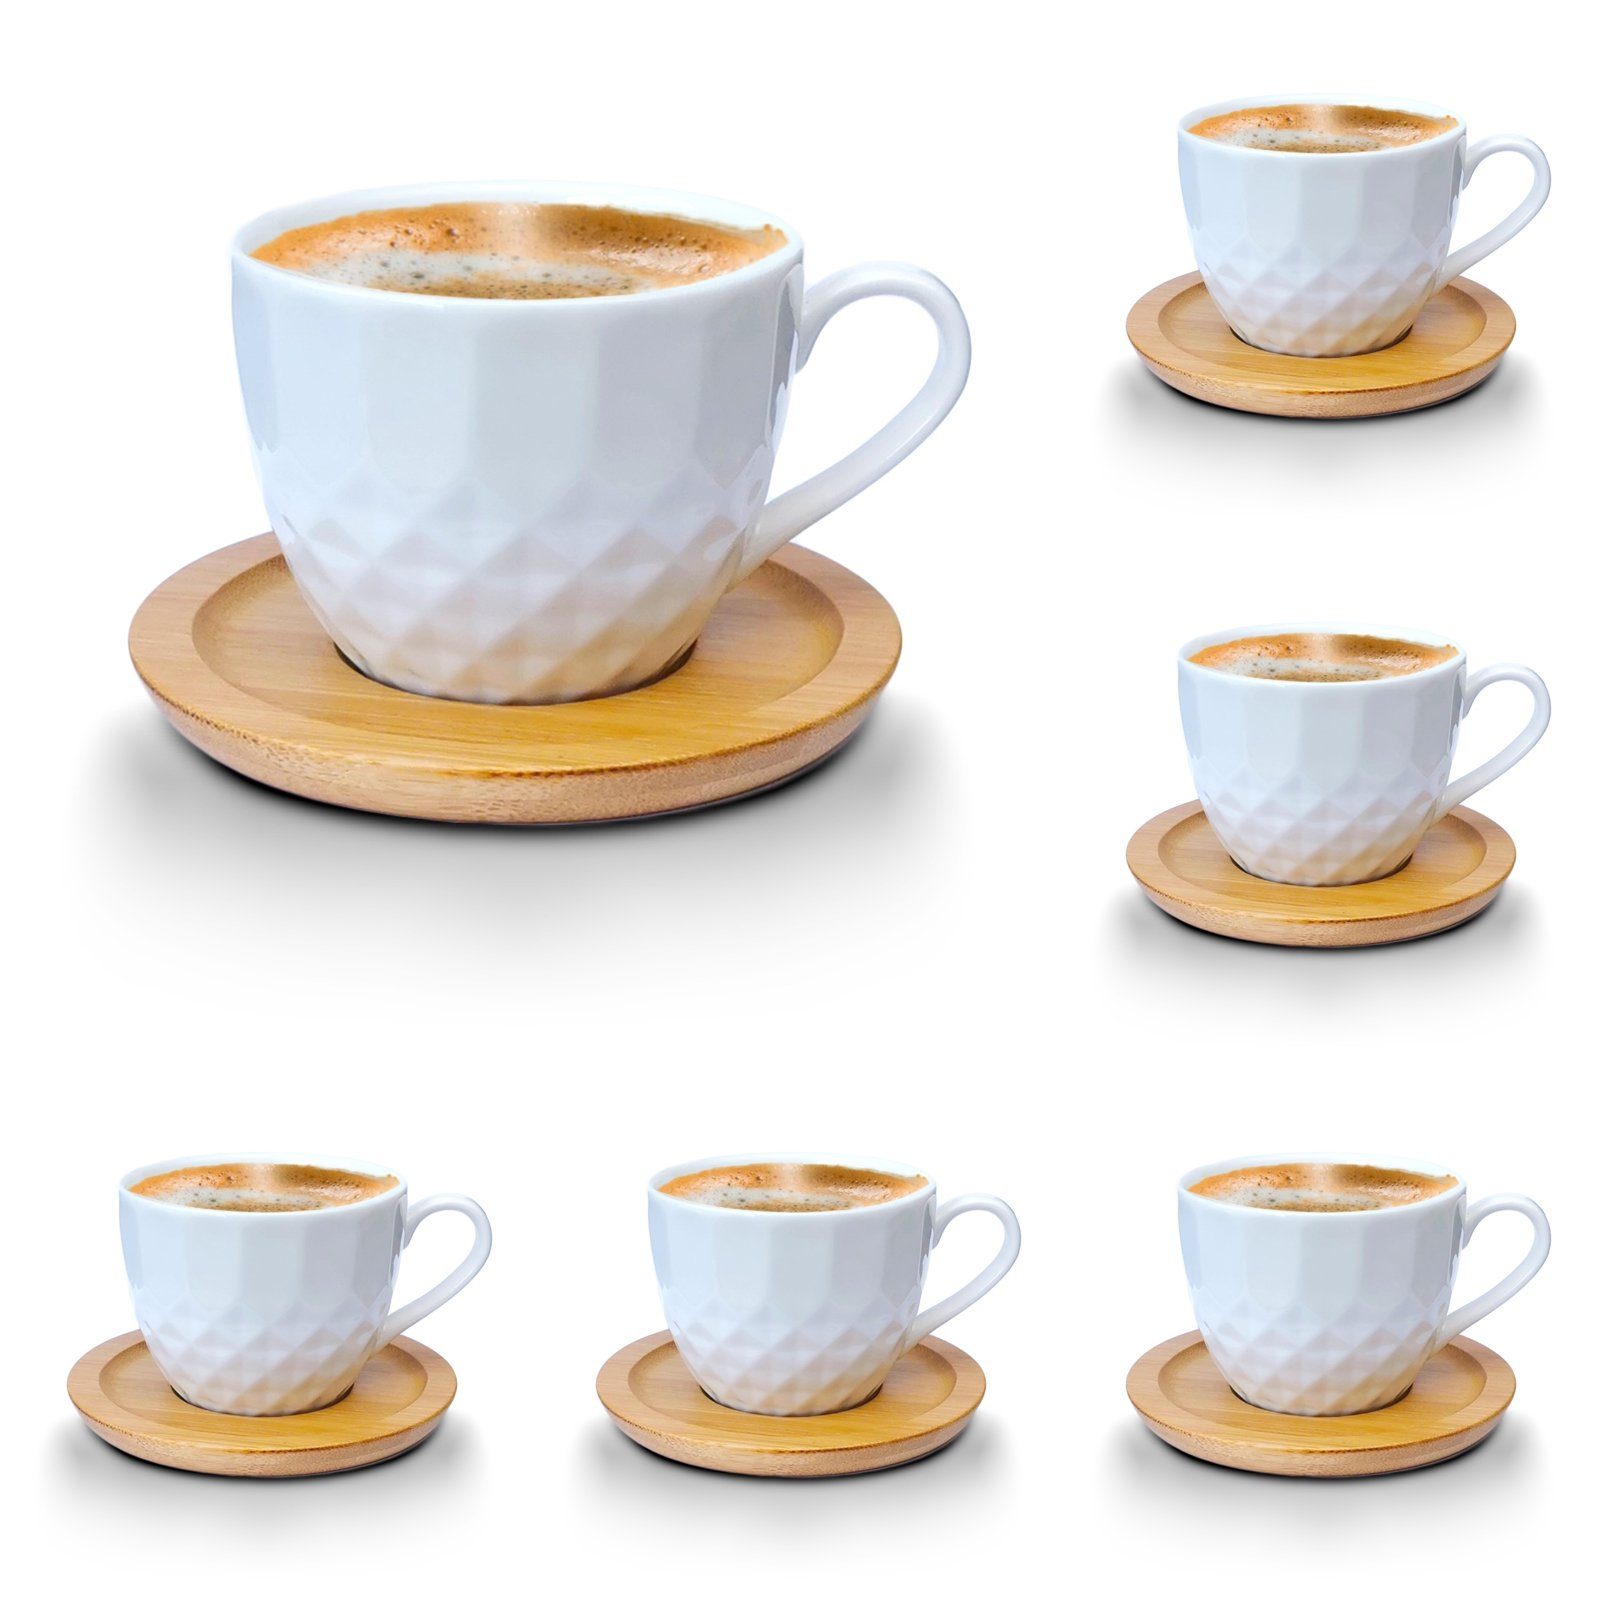 Melody Tasse Porzellan Tassen Set Teeservice Kaffeeservice mit Untertassen 12-Teilig, Porzellan, Espressotassen, 6er-Set, mit Untertassen Mod3